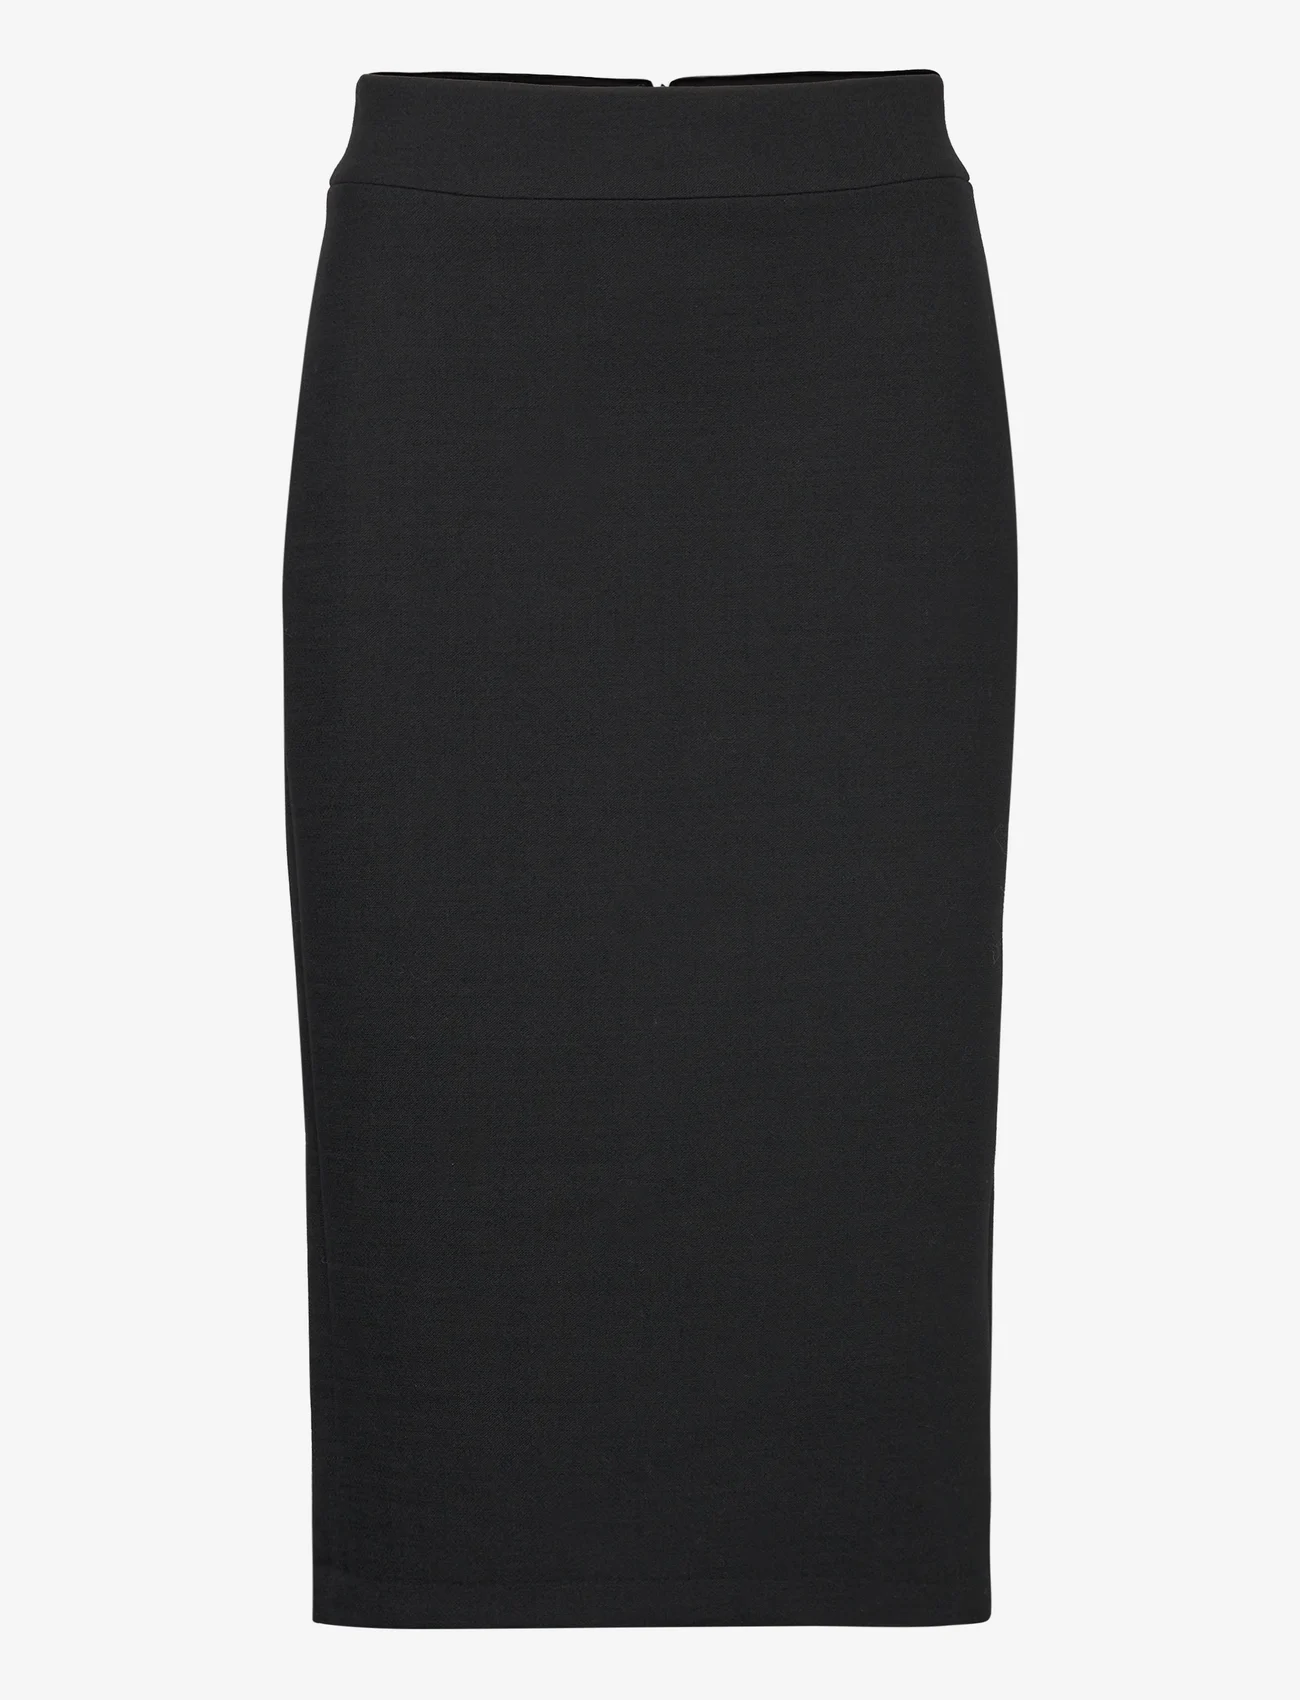 Andiata - Fibi 80 skirt - kynähameet - black - 0